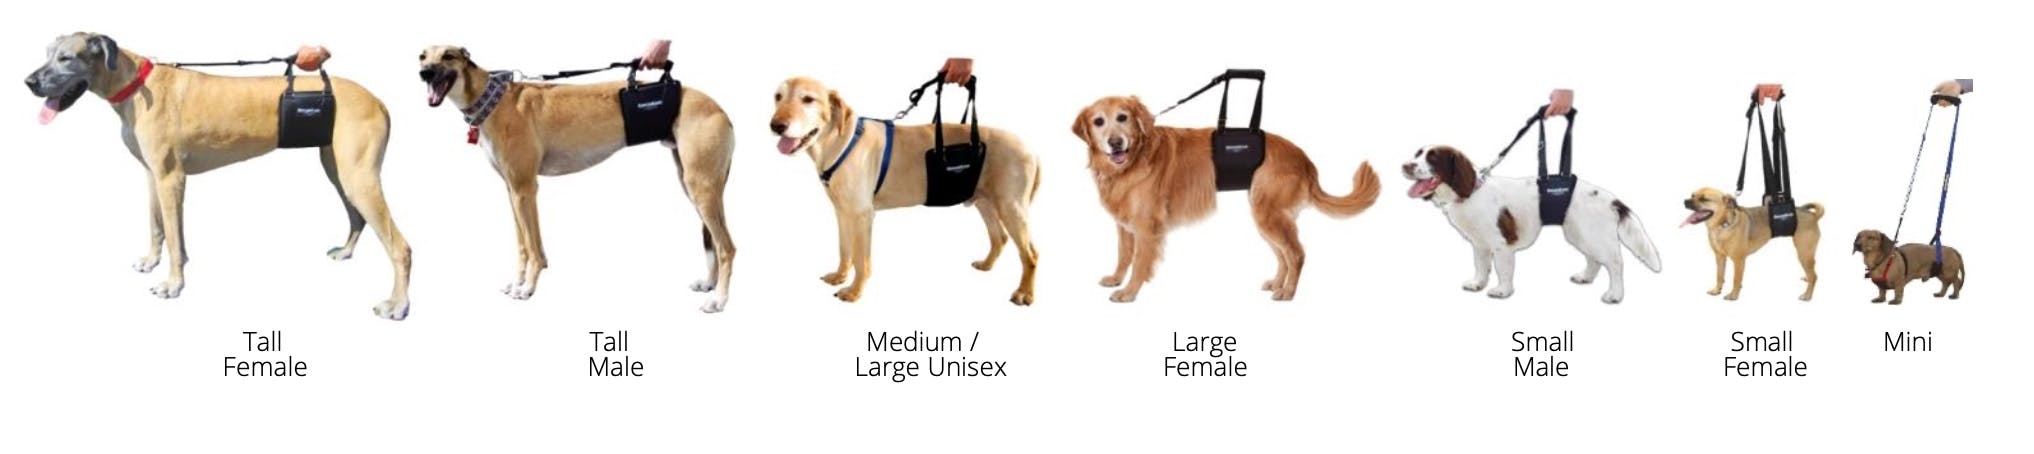 GingerLead- Dog Support & Rehabilitation Harnesses